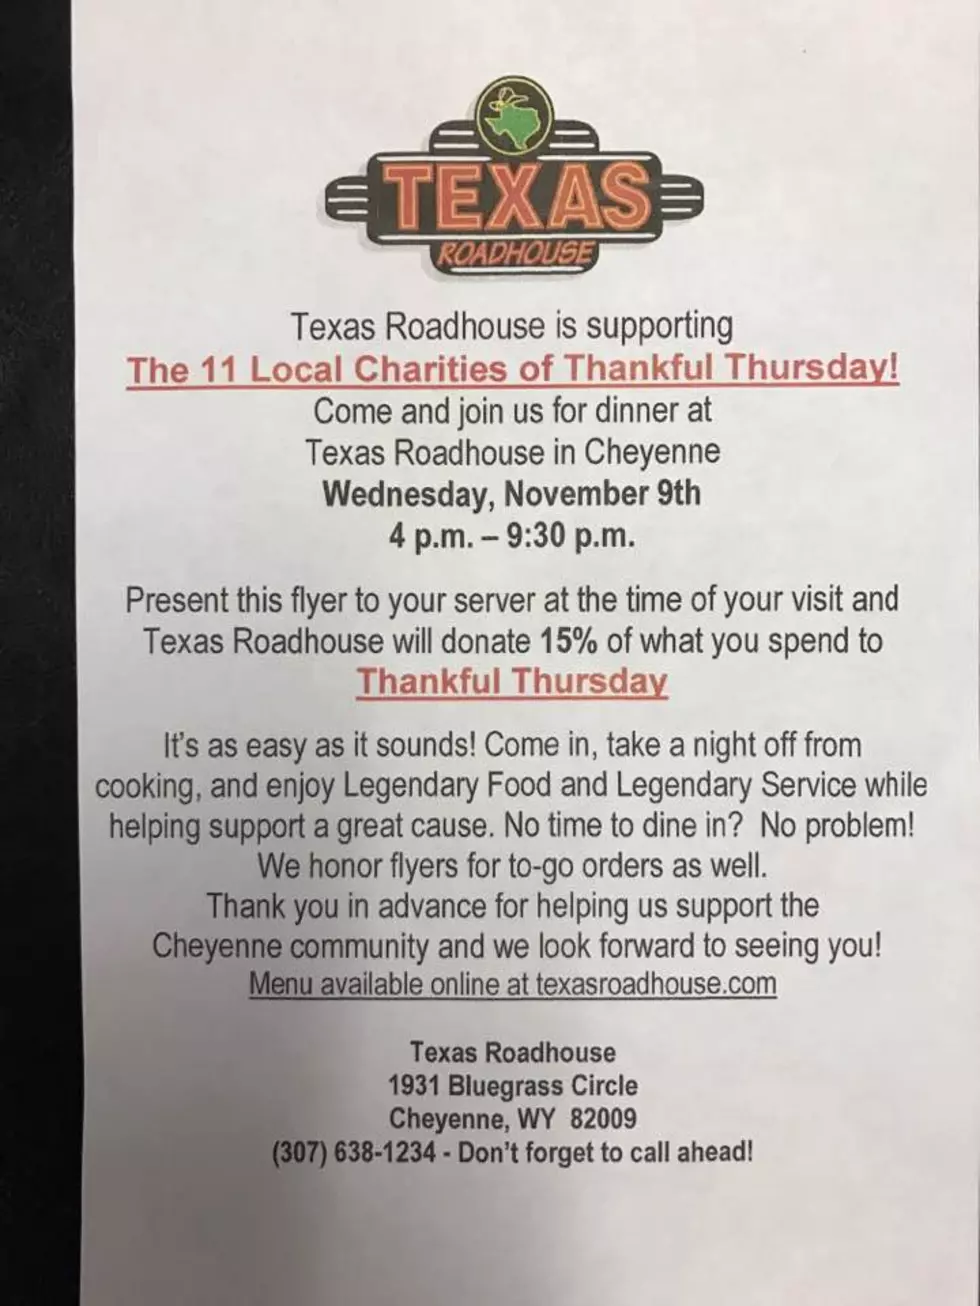 Thankful Thursday Fundraiser Wednesday Night at Texas Roadhouse